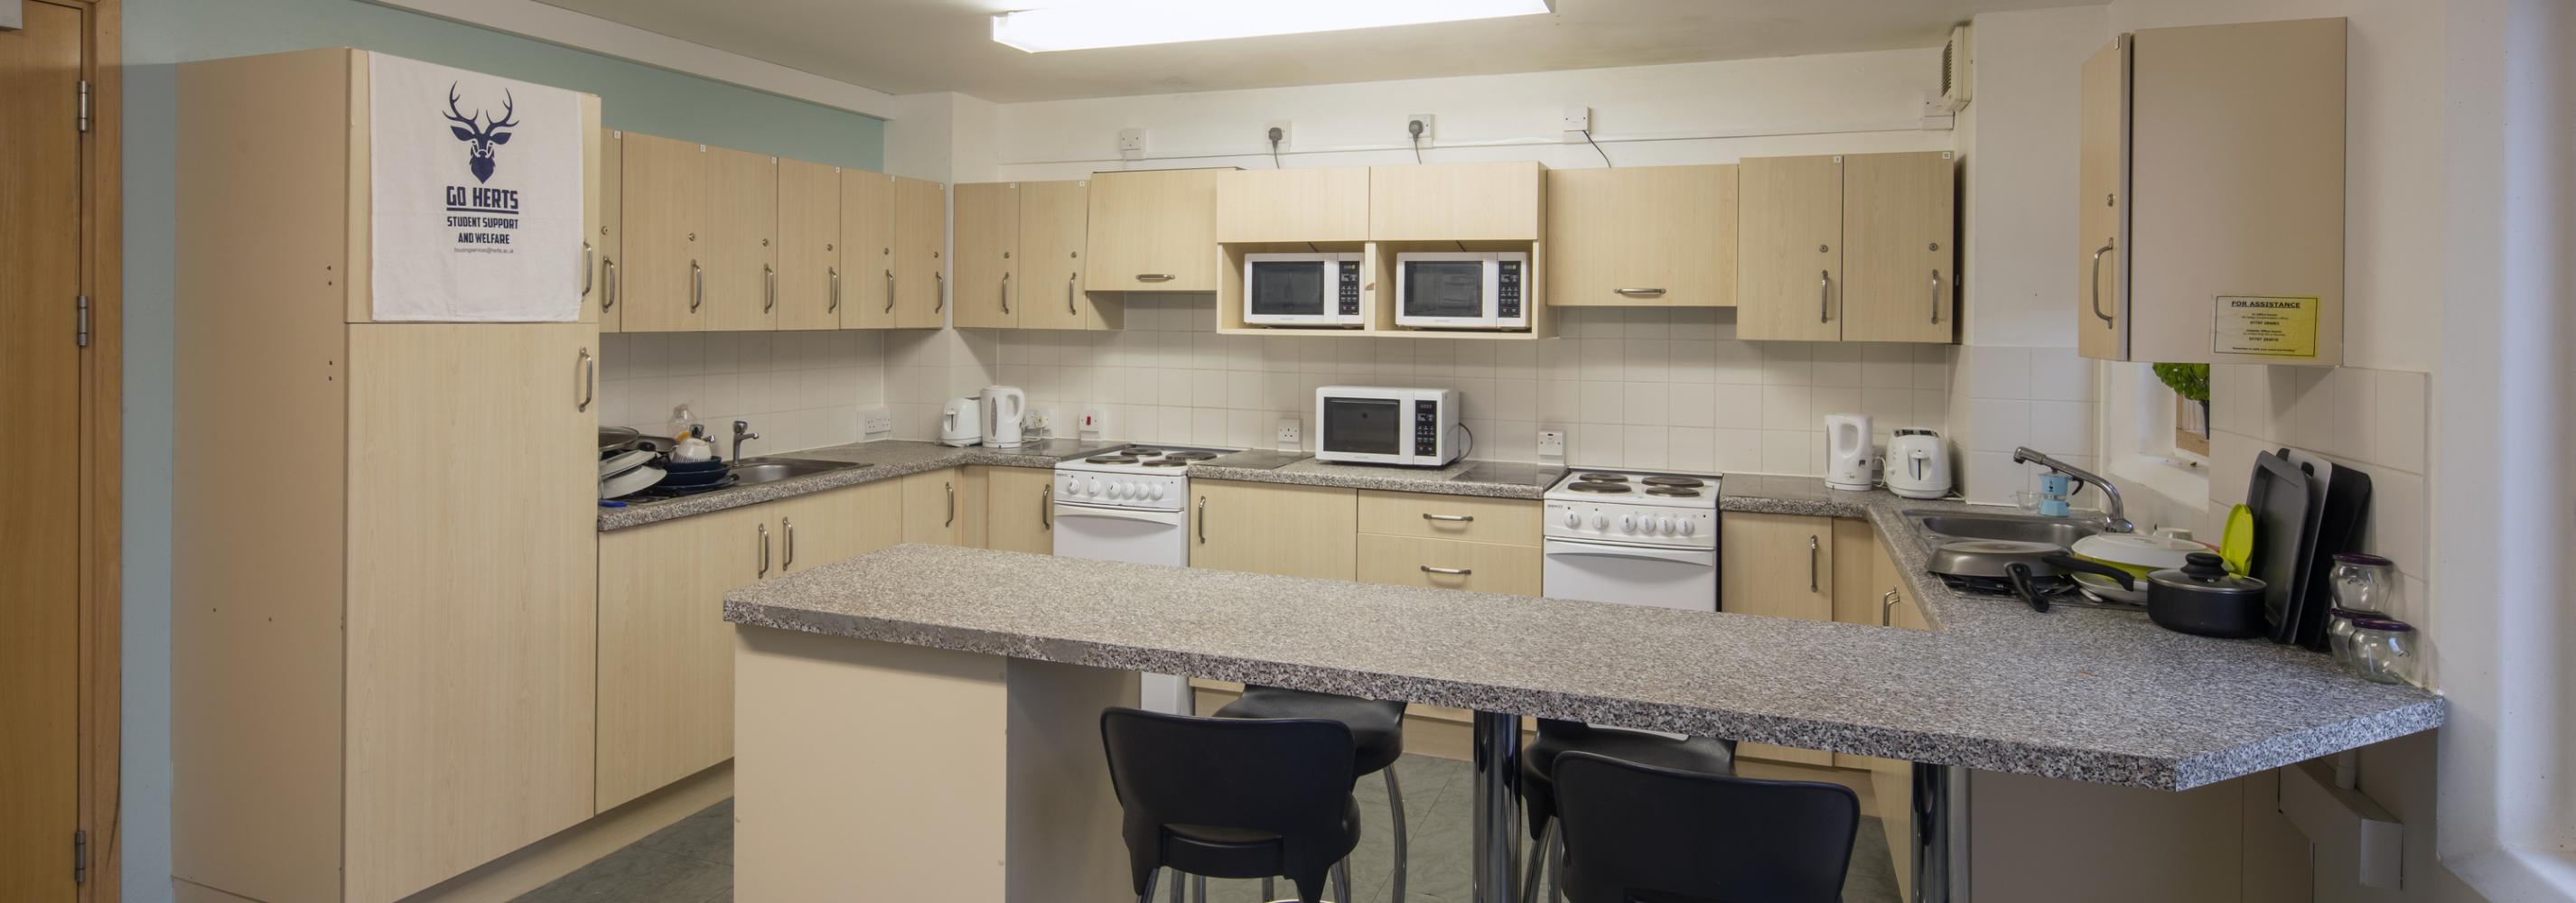 A de Havilland campus kitchen